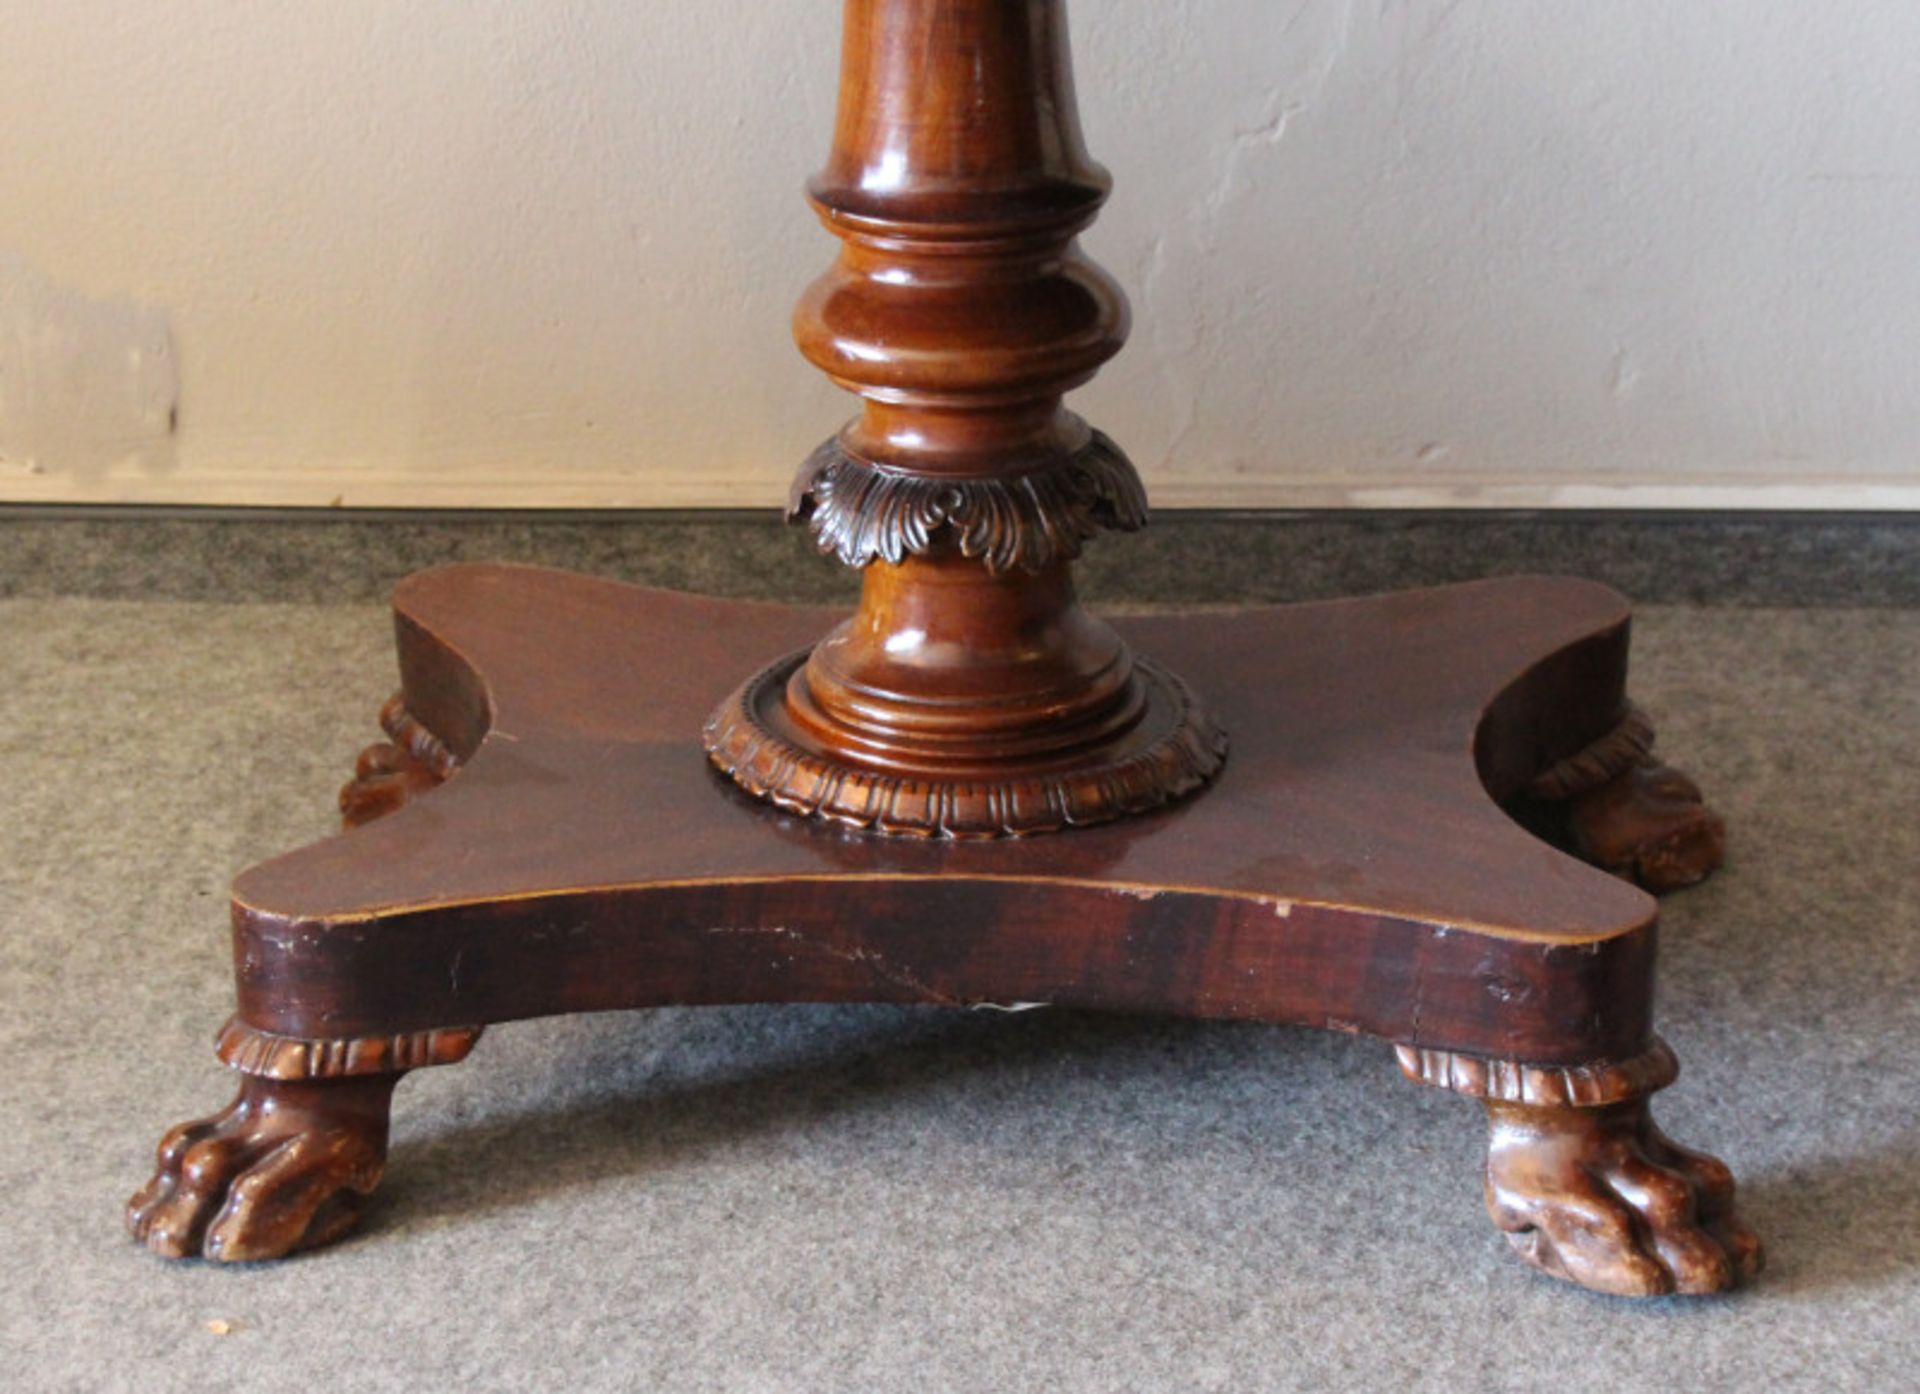 Ovaler Biedermeier Tisch aus Mahagoni/Tischplatte Esche, gebeizt, 19. Jhd.beschnitzte Säule, - Bild 2 aus 2